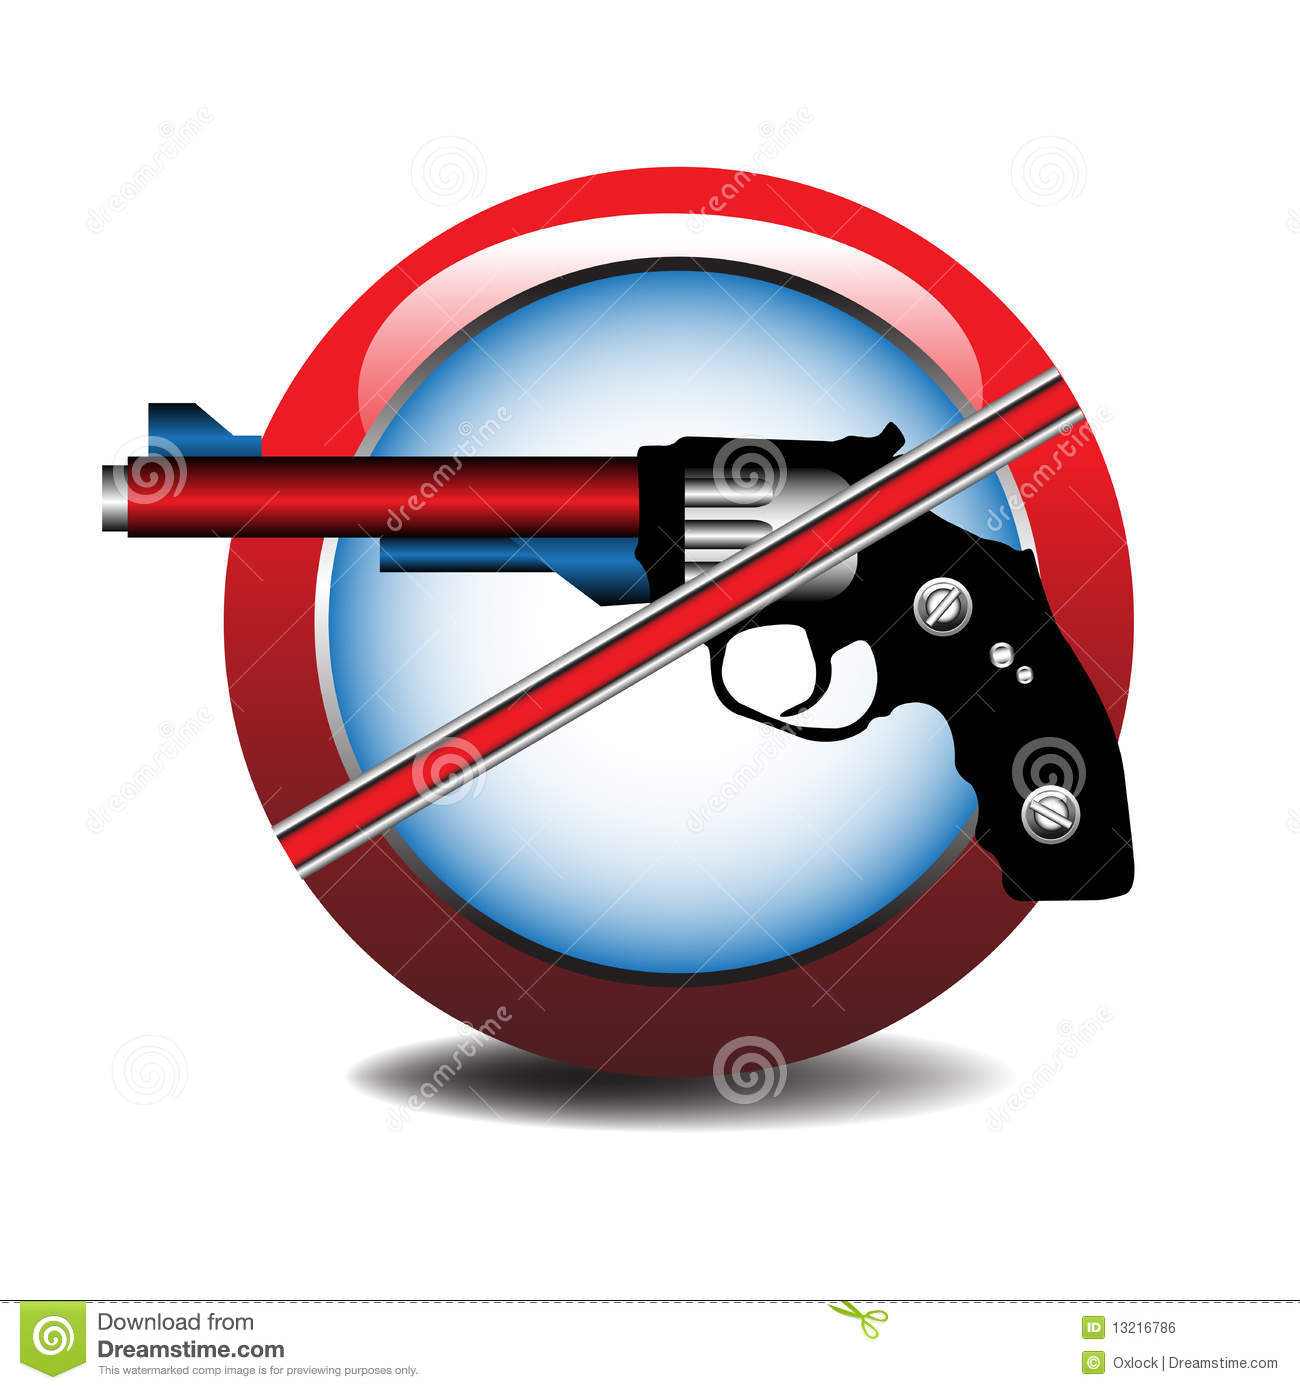     Symbol Which Shows That No Guns Are Allowed Mr No Pr No 2 2215 3